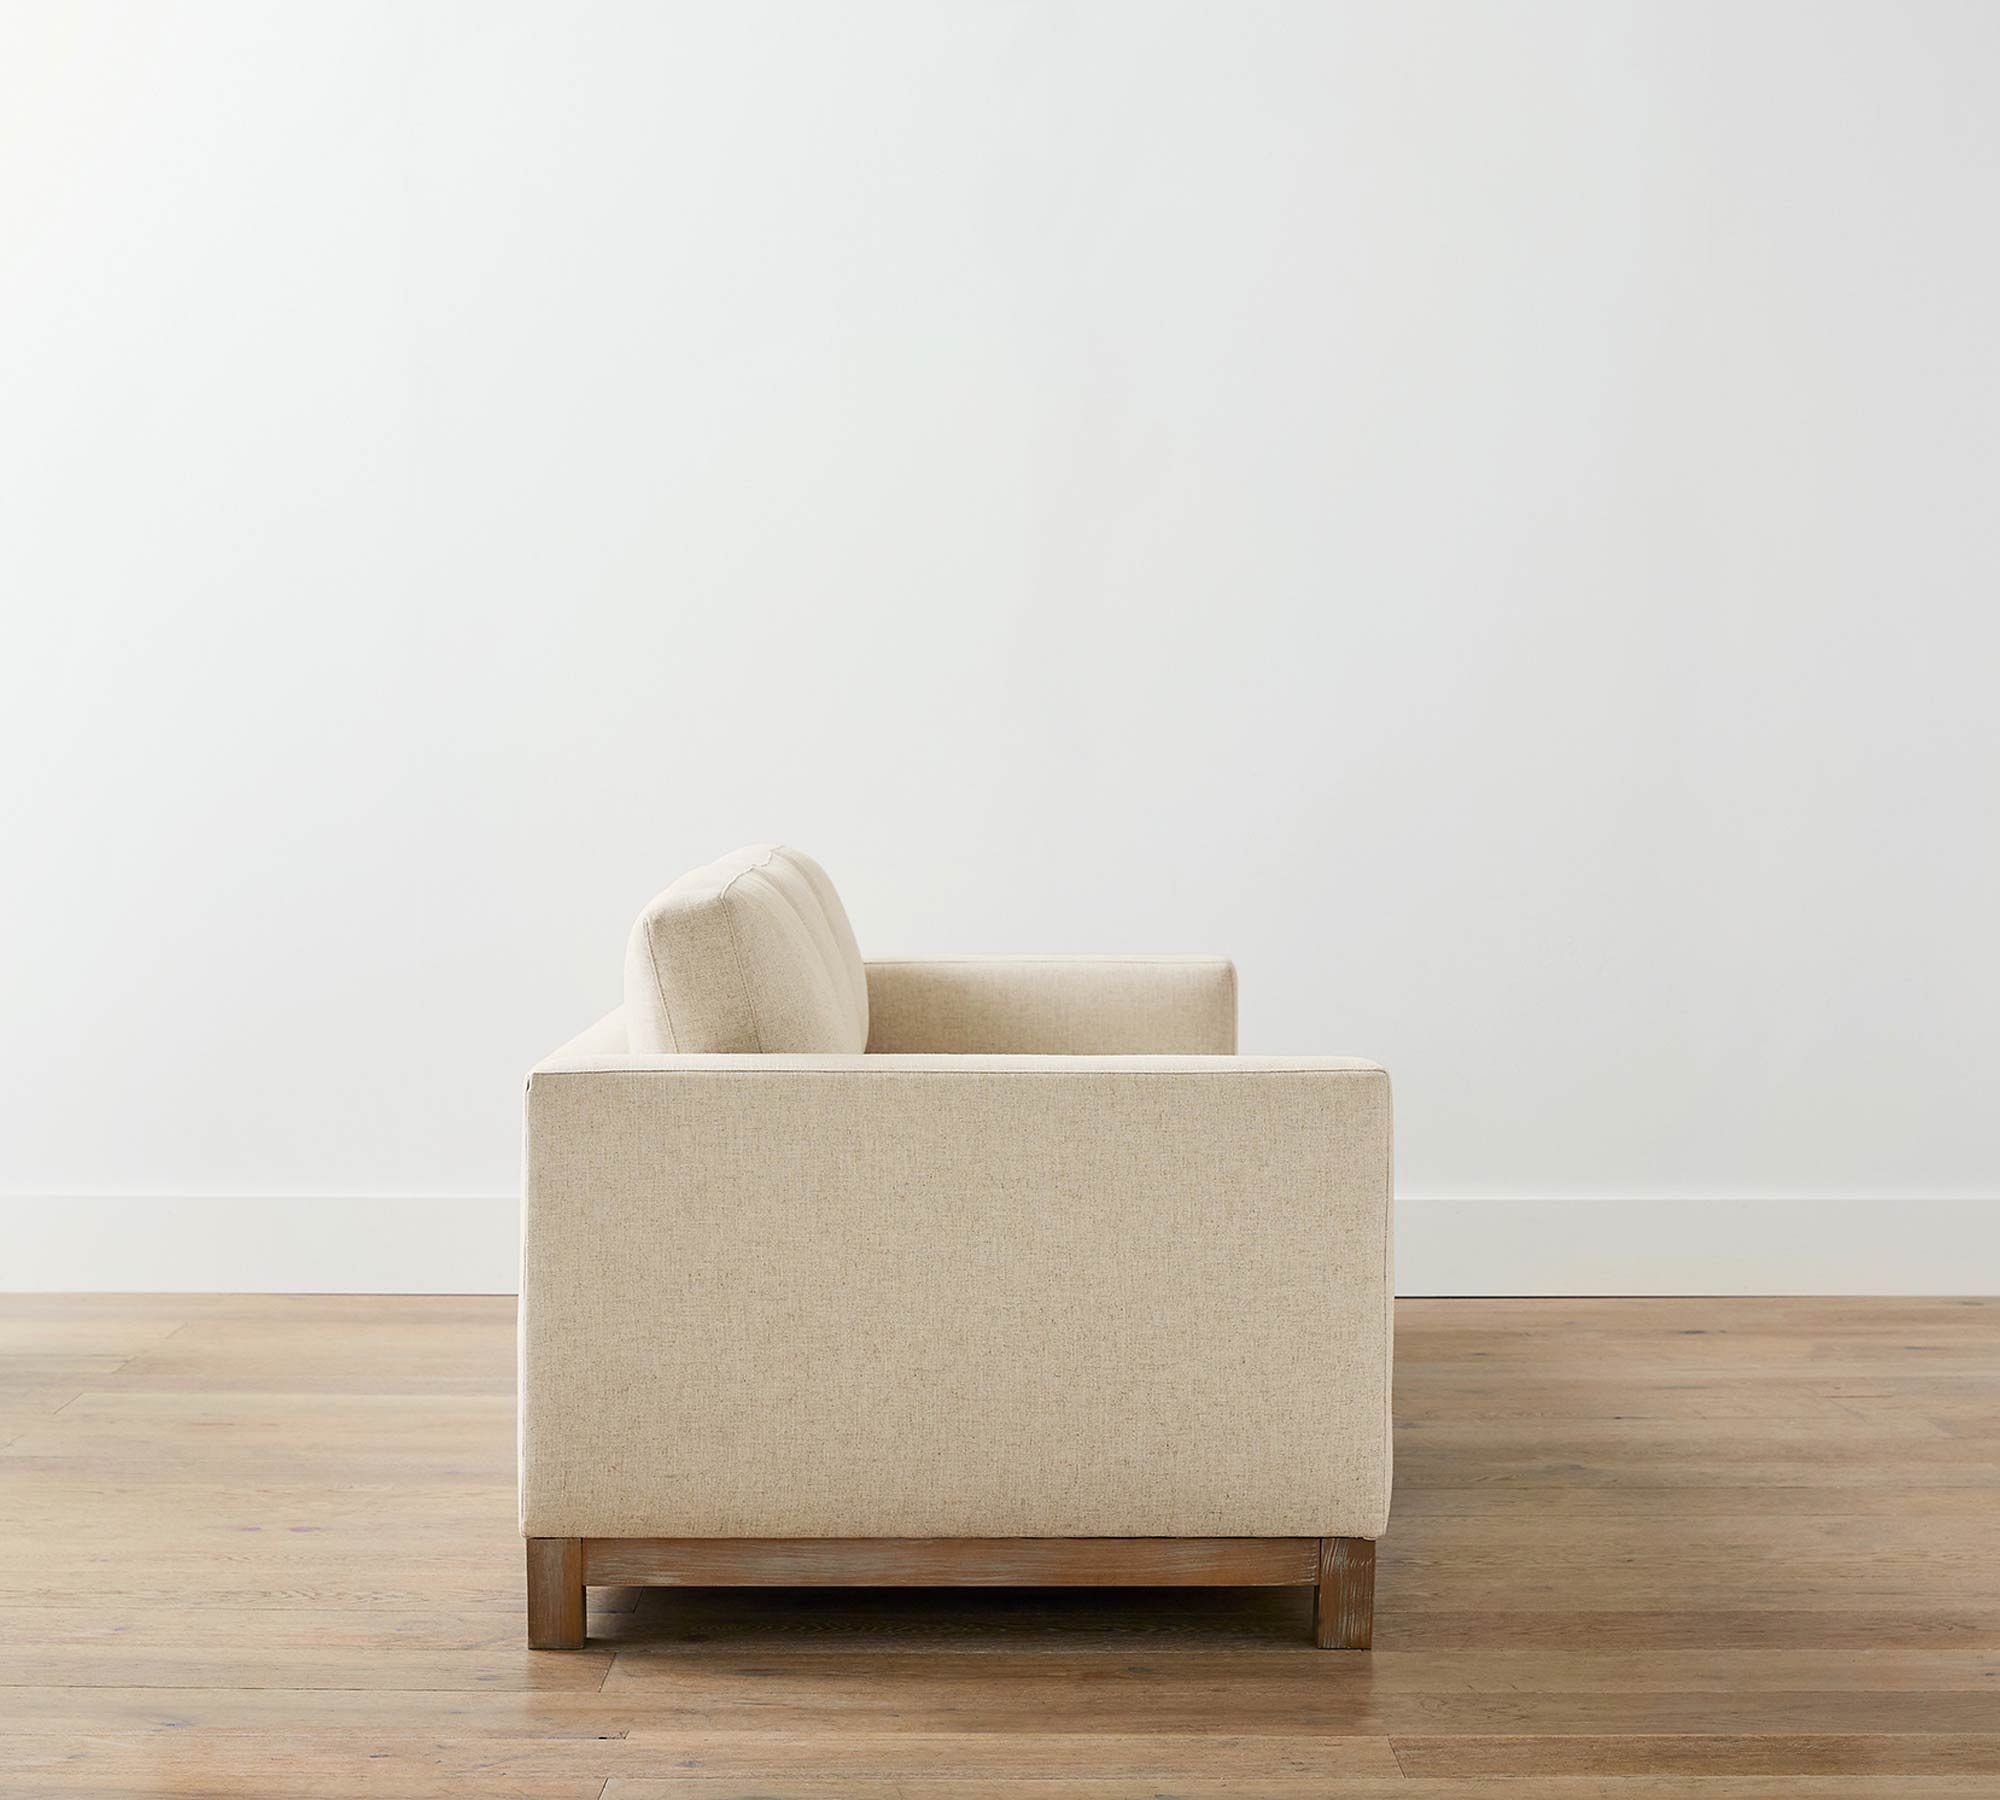 Jake Upholstered Sofa 3x1 86" with Wood Base, Standard Cushions, Premium Performance Basketweave Ivory - Image 3